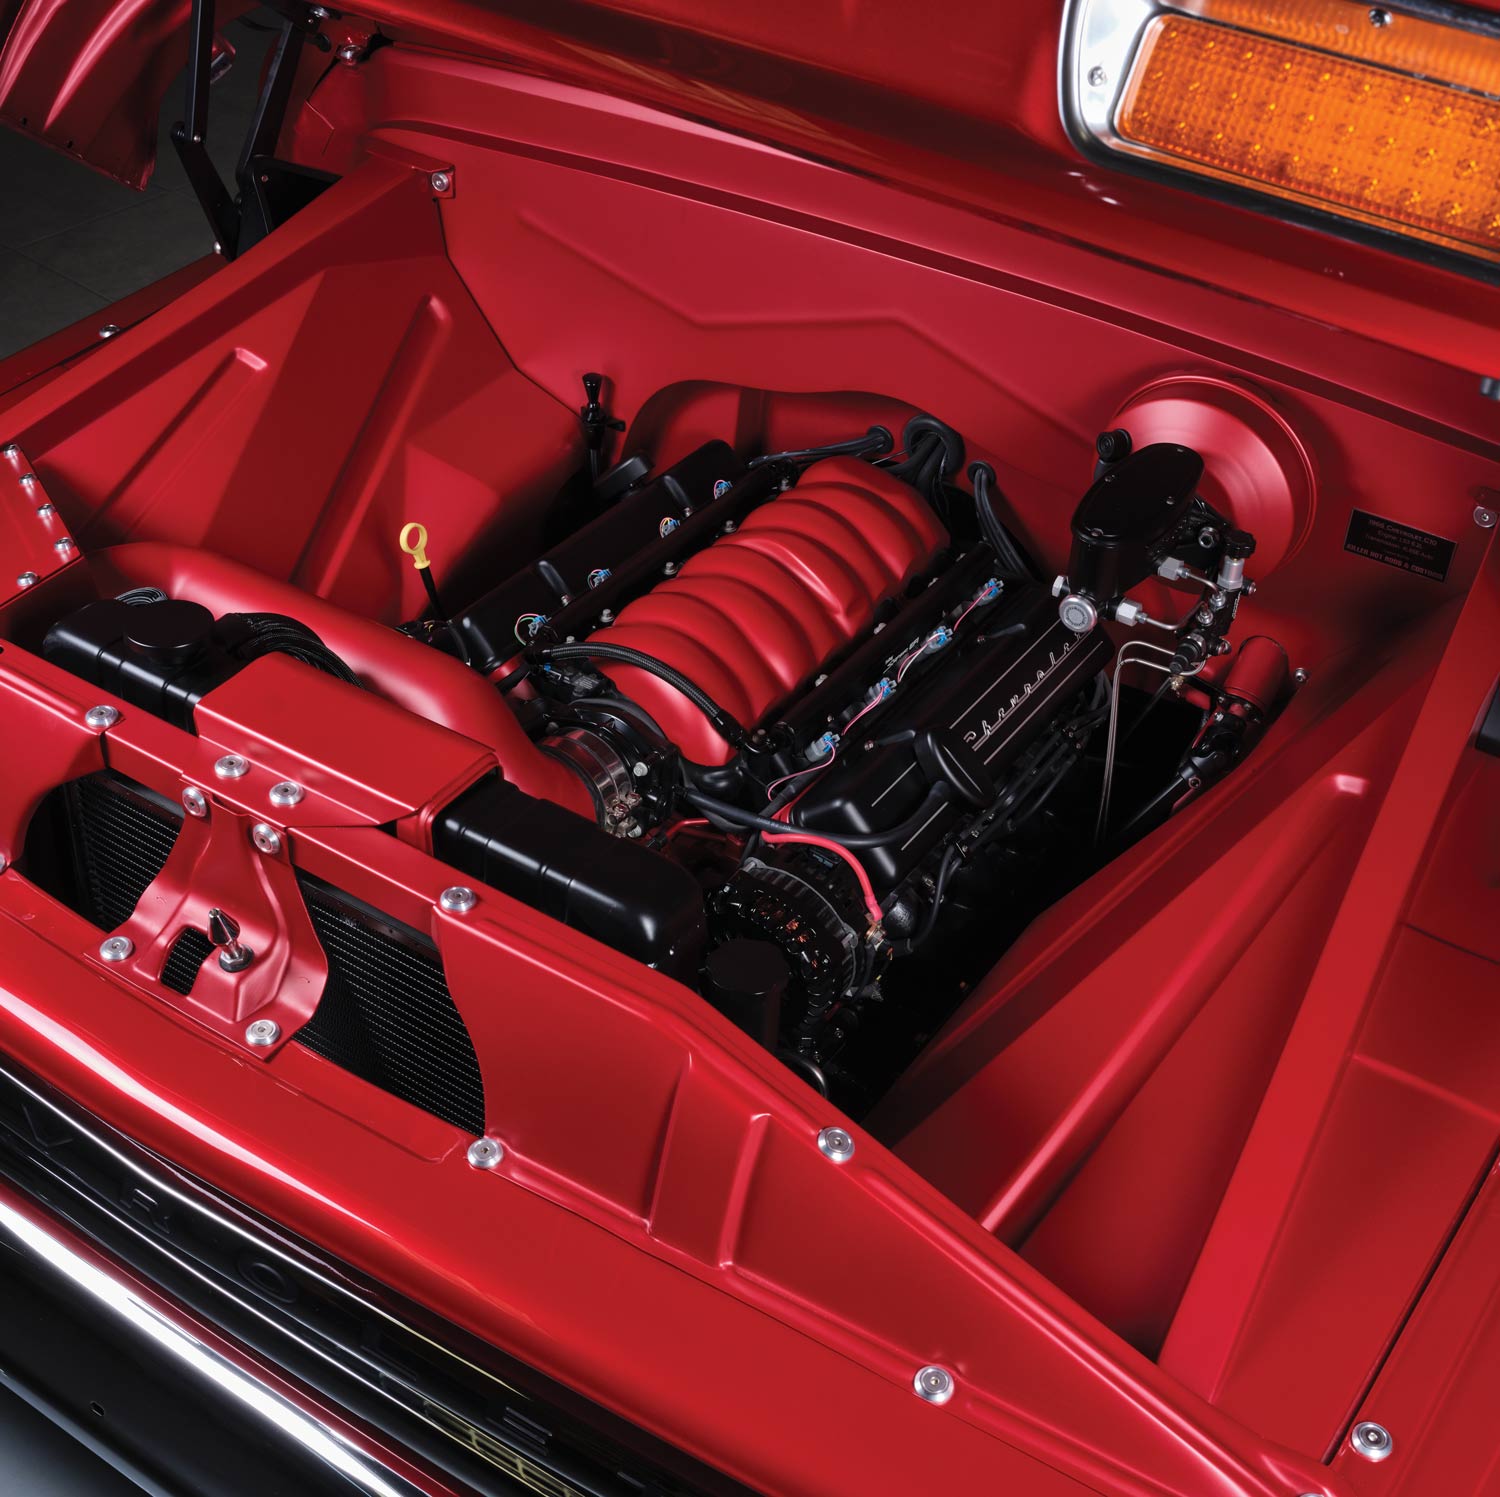 ’66 Chevy's engine